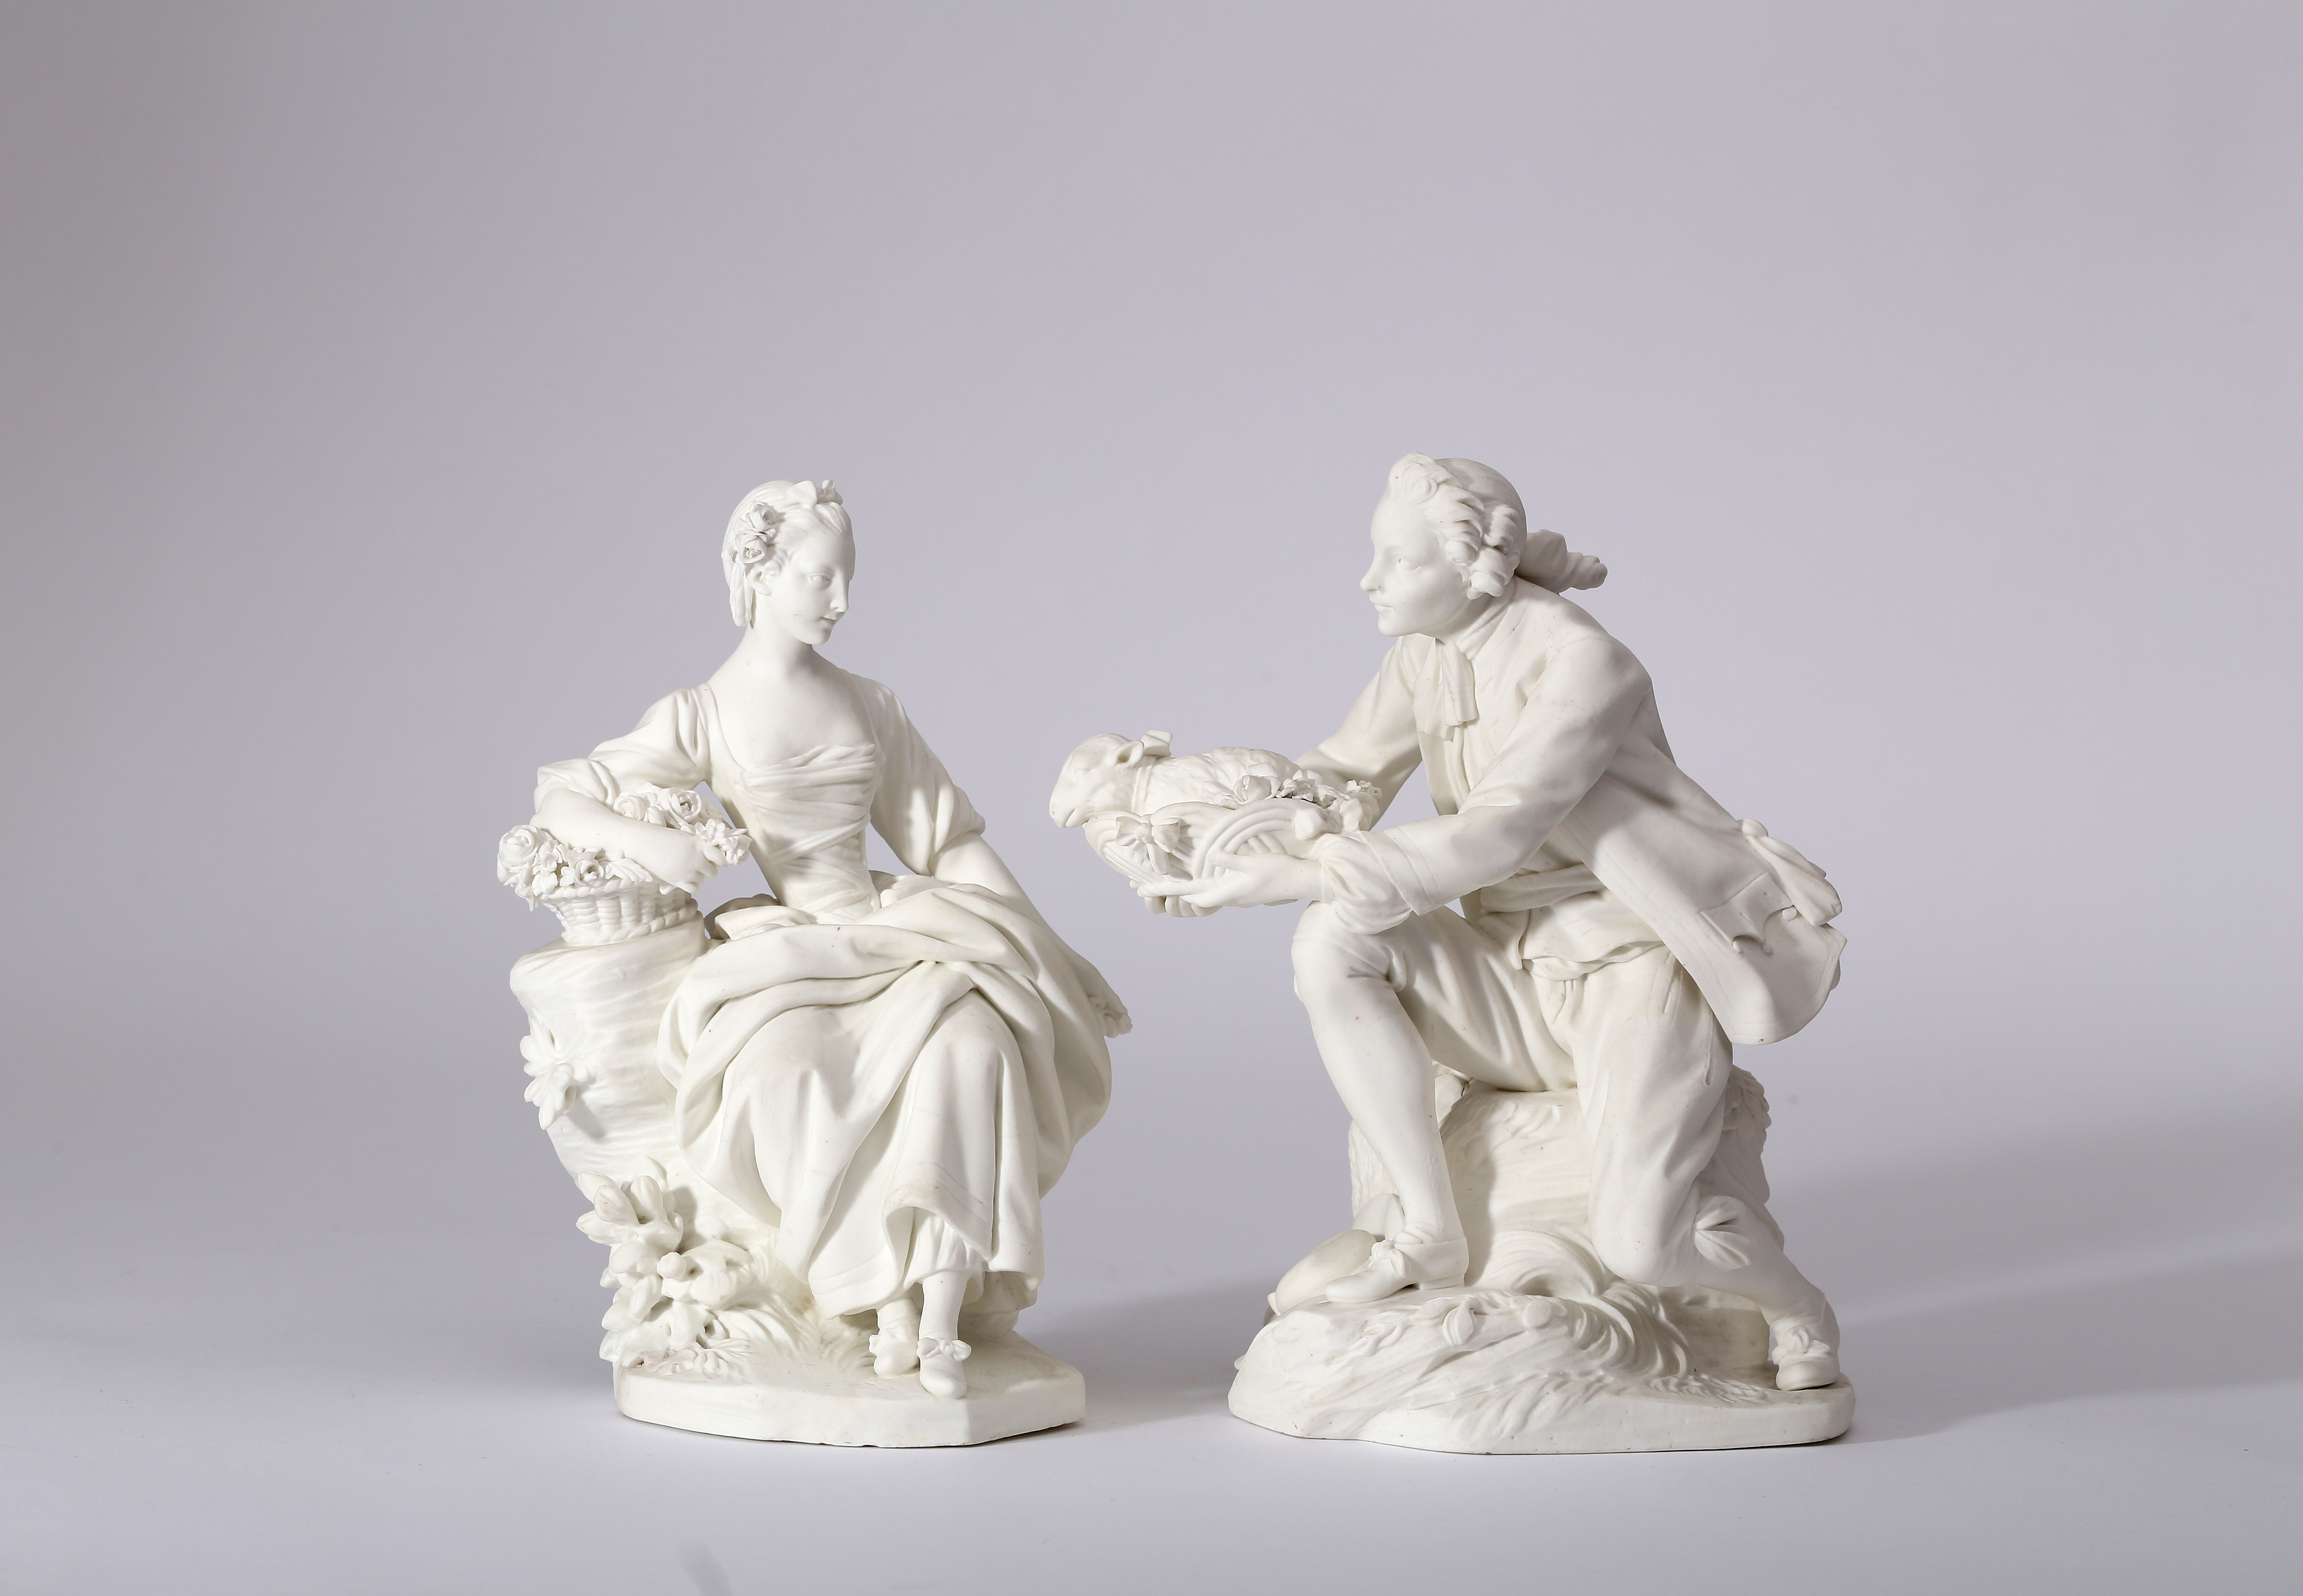 A Pair of Sèvres Biscuit Porcelain Figures of Children, 'La Petite Fille à  la Cage' and 'Le Porteur d'Oiseaux', Circa 1760, A Taste of Rococo:  Porcelain from an American Private Collection